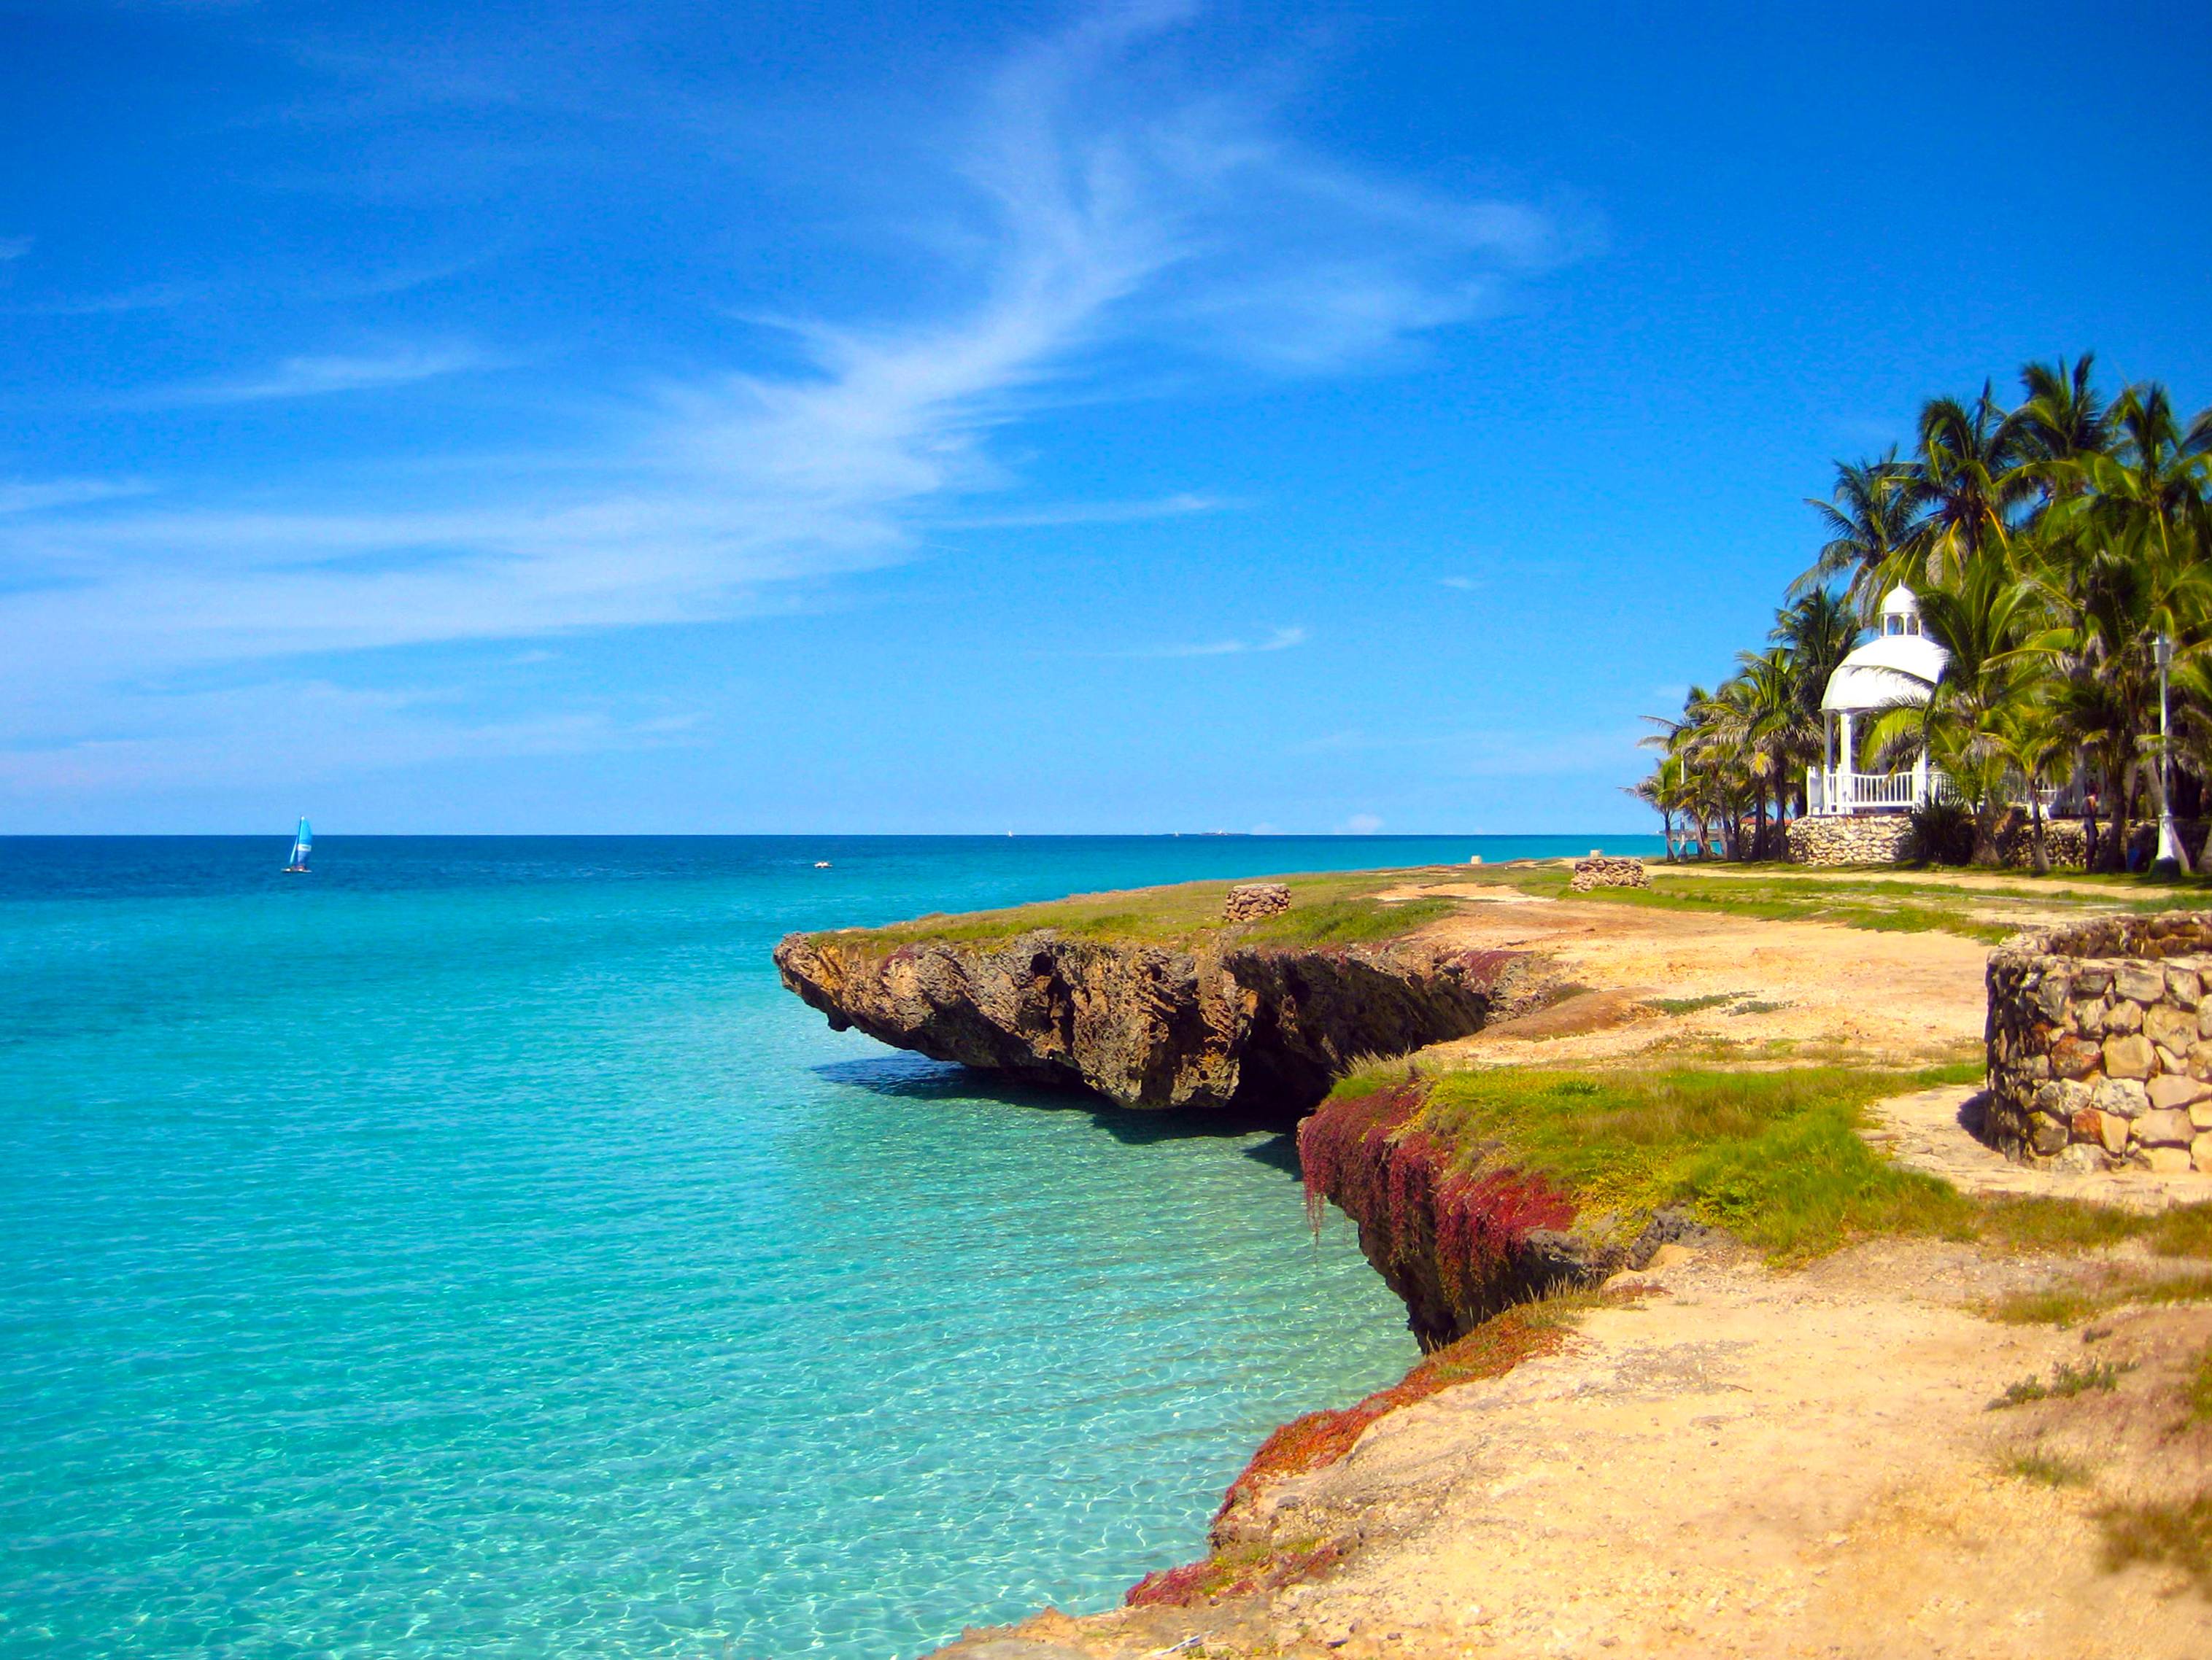 Download wallpaper caribbean beach Hotel free desktop wallpaper